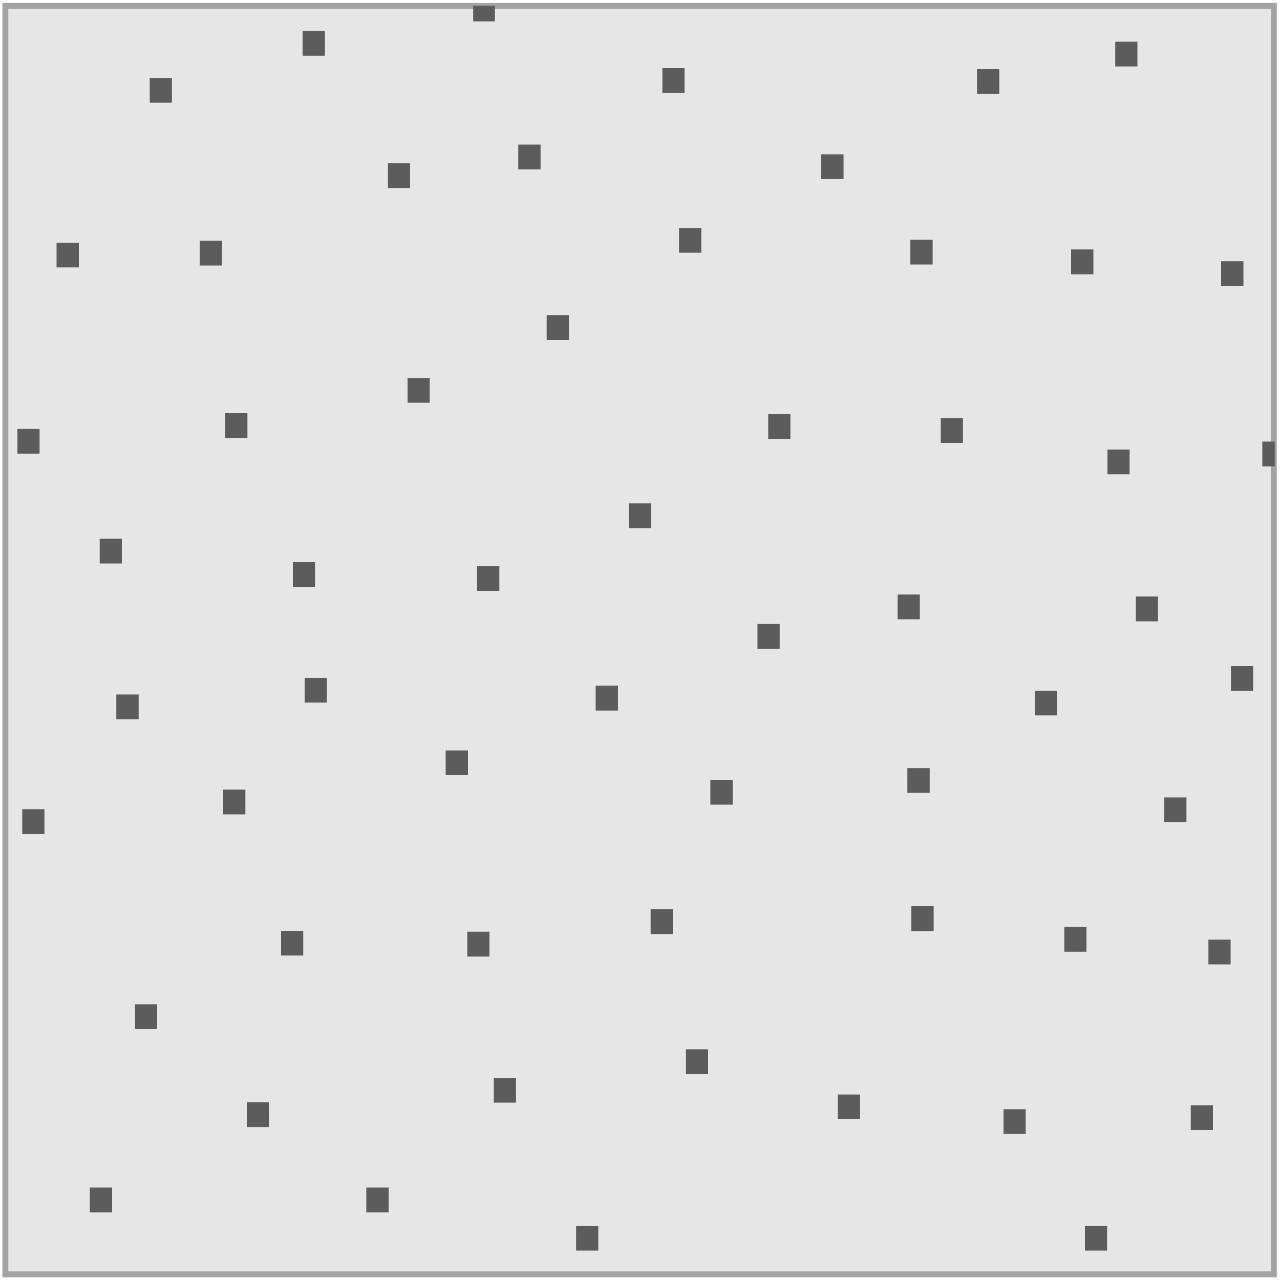 2 by 4 inch dot pattern